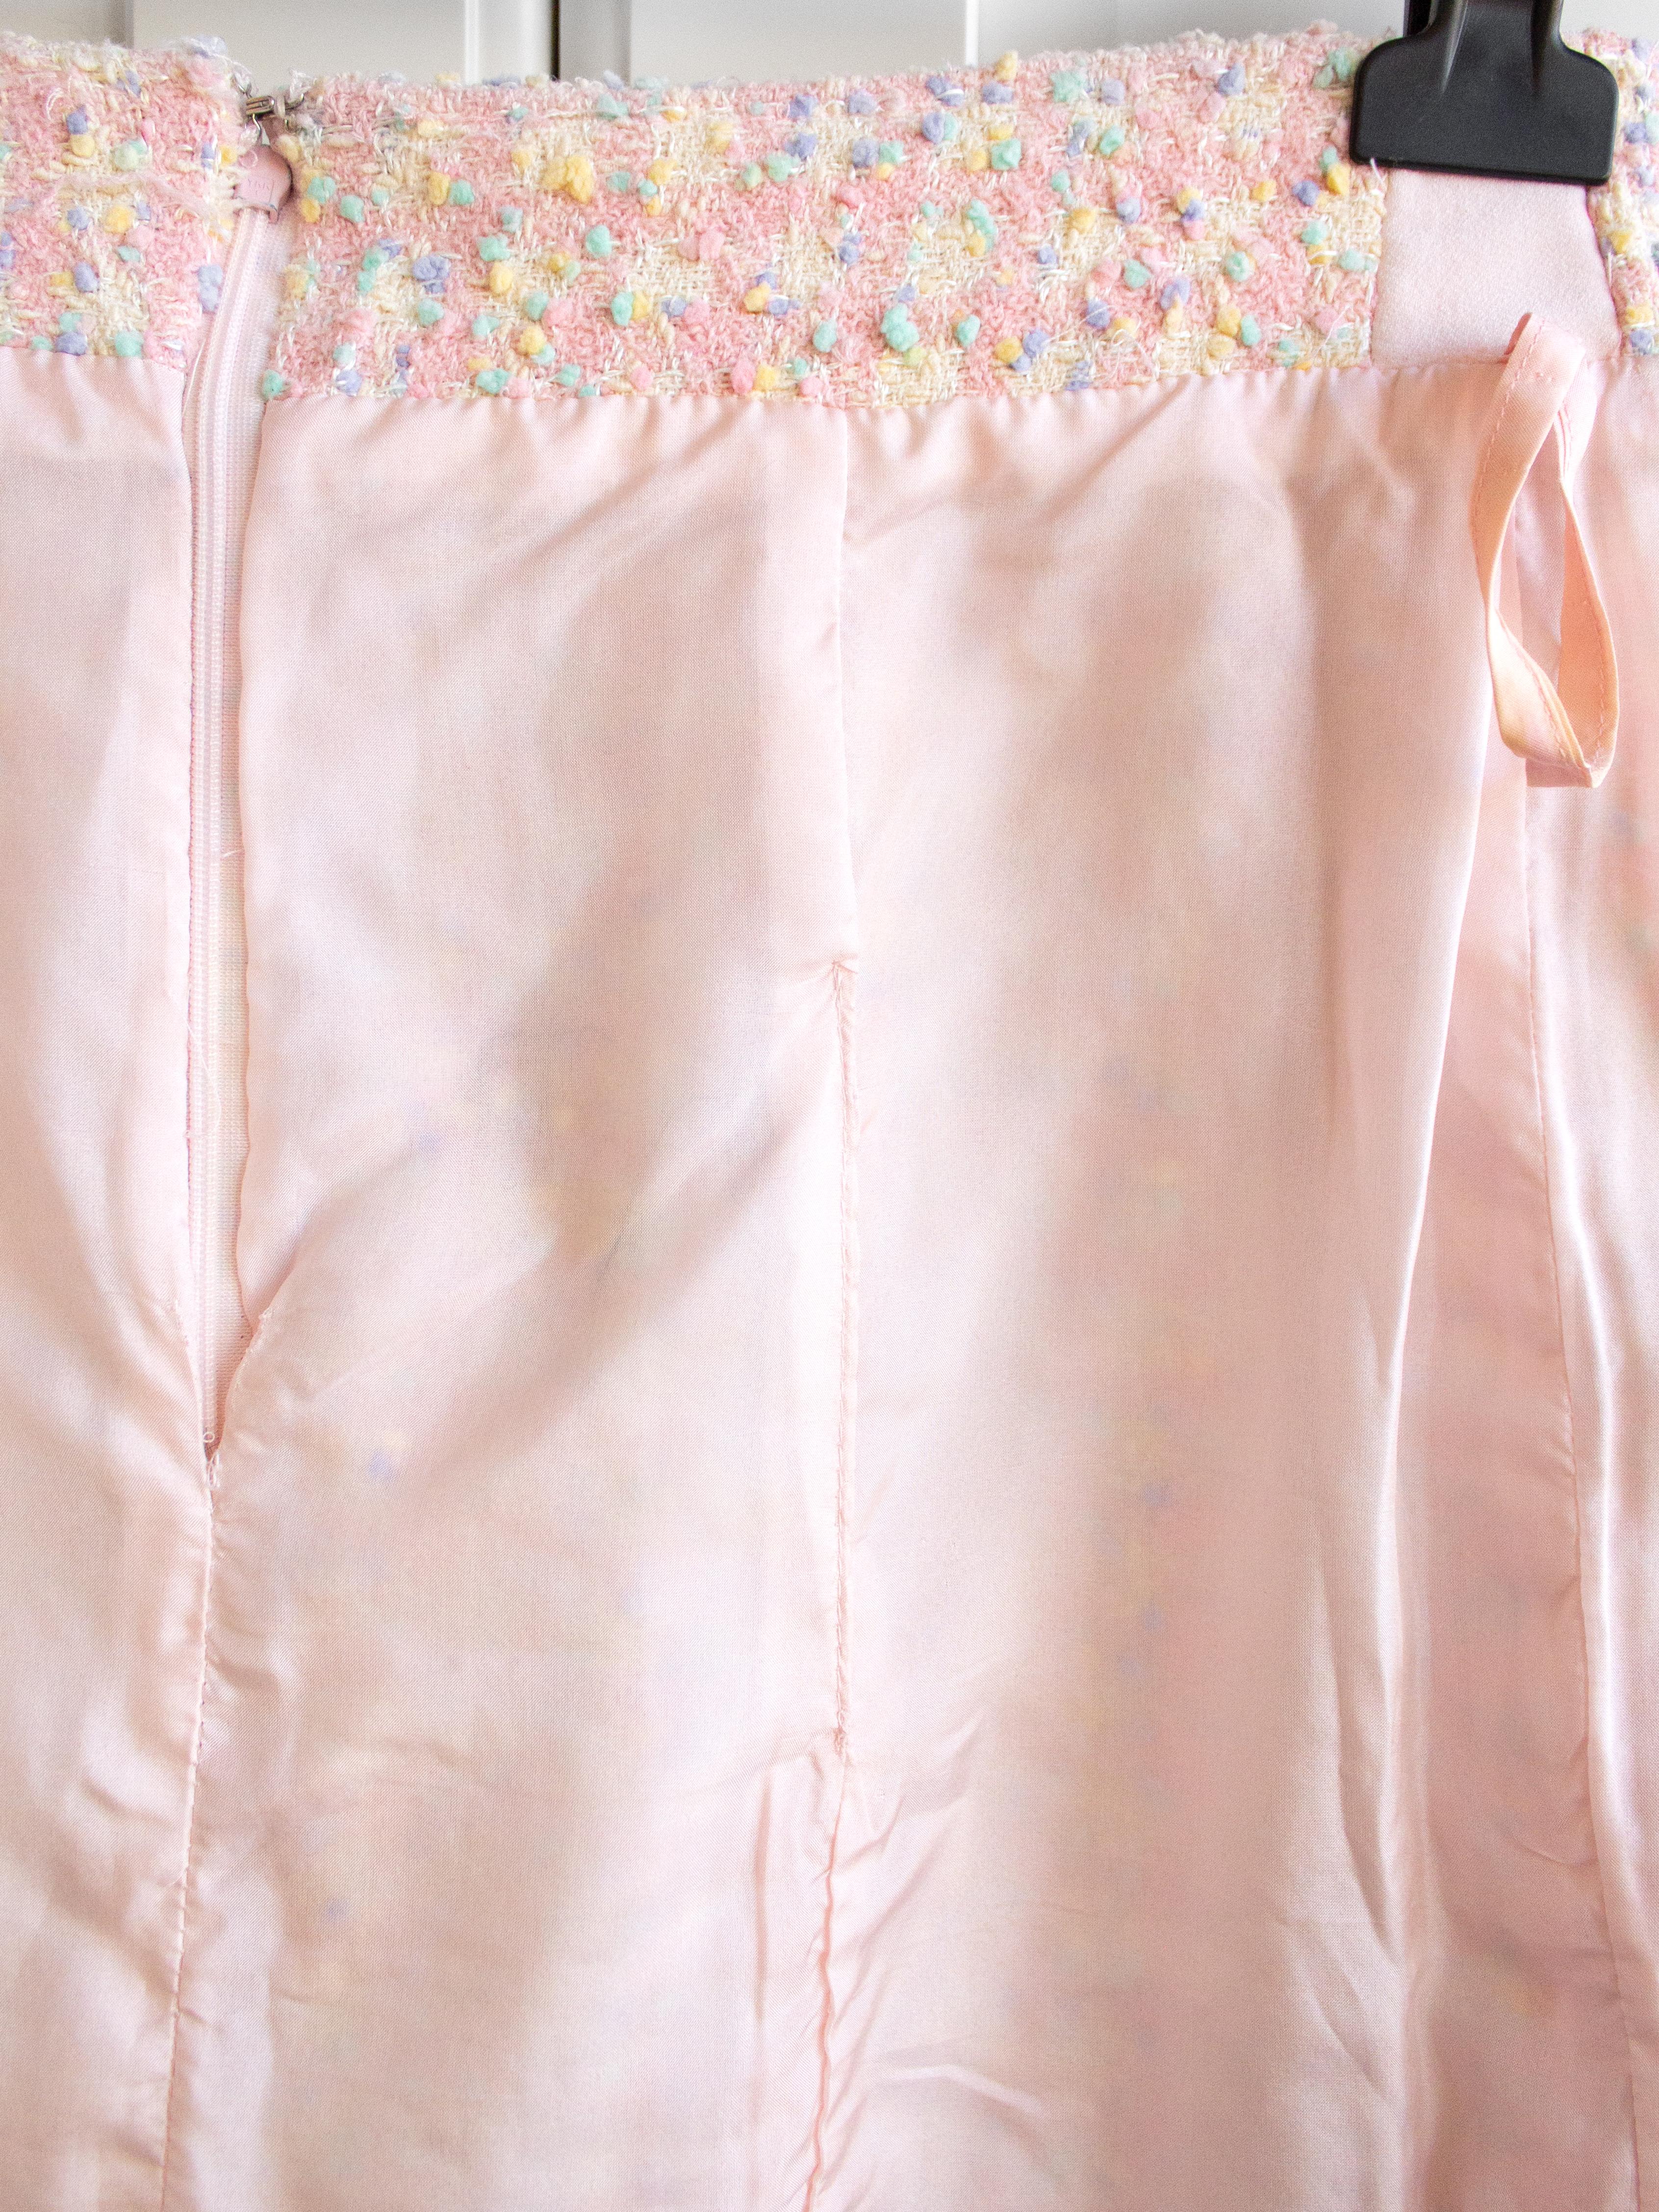 Iconic Chanel Vintage S/S 1994 Runway Pink Popcorn Tweed 94P Jacket Skirt Suit 8